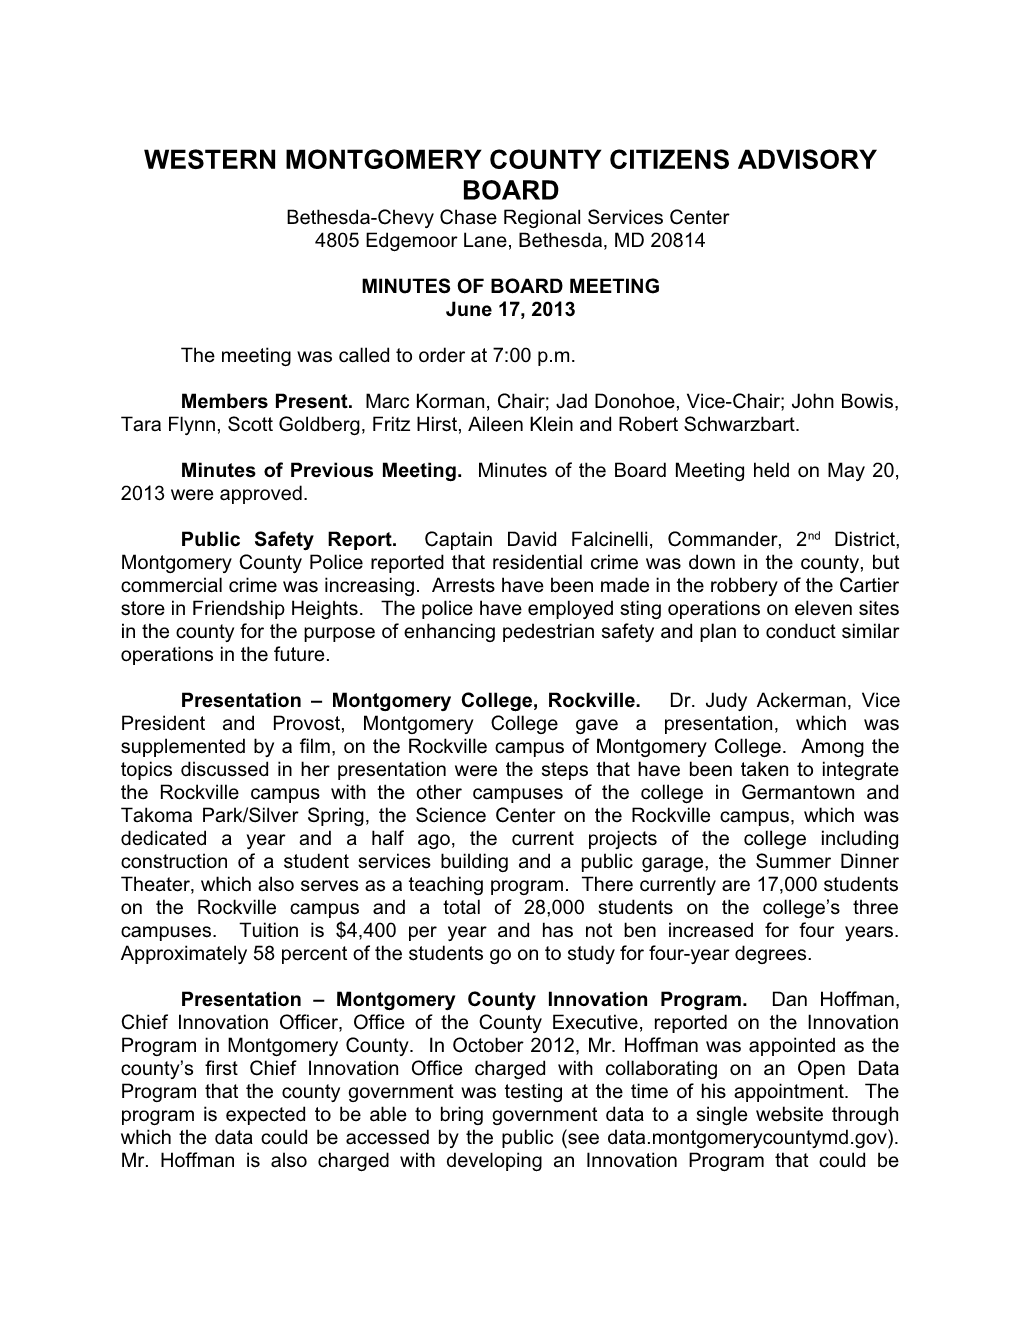 Western Montgomery County Citizens Advisory Board